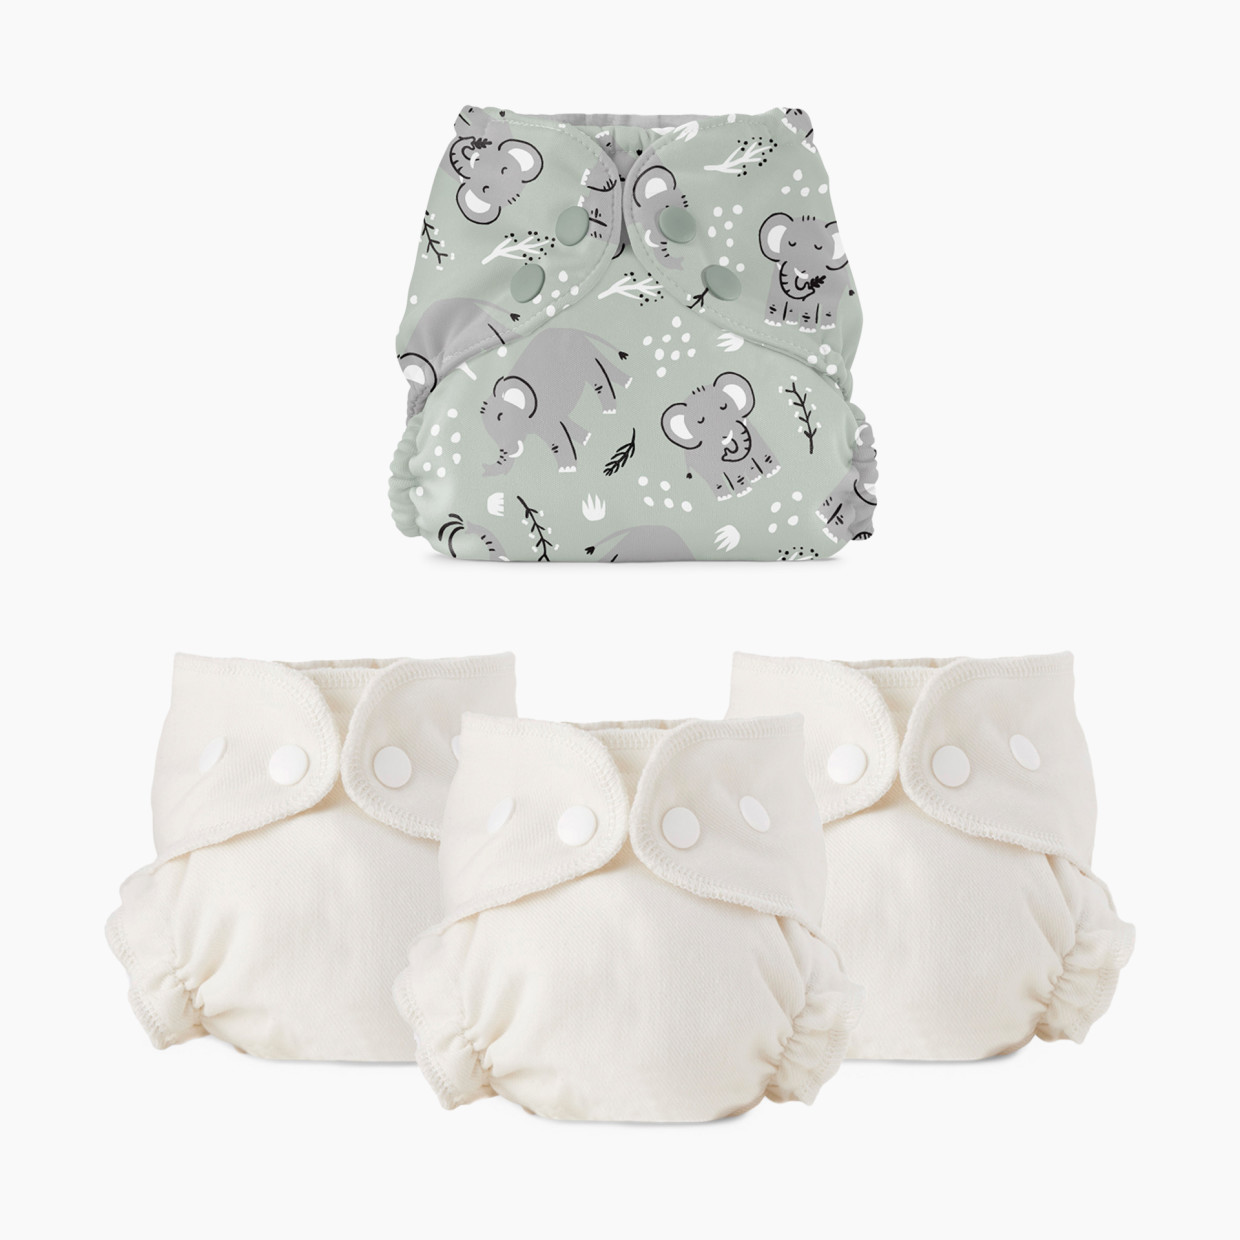 Esembly Blowout Proof Cloth Diaper Bundle - Elephants, Size 1 (7-17lbs).